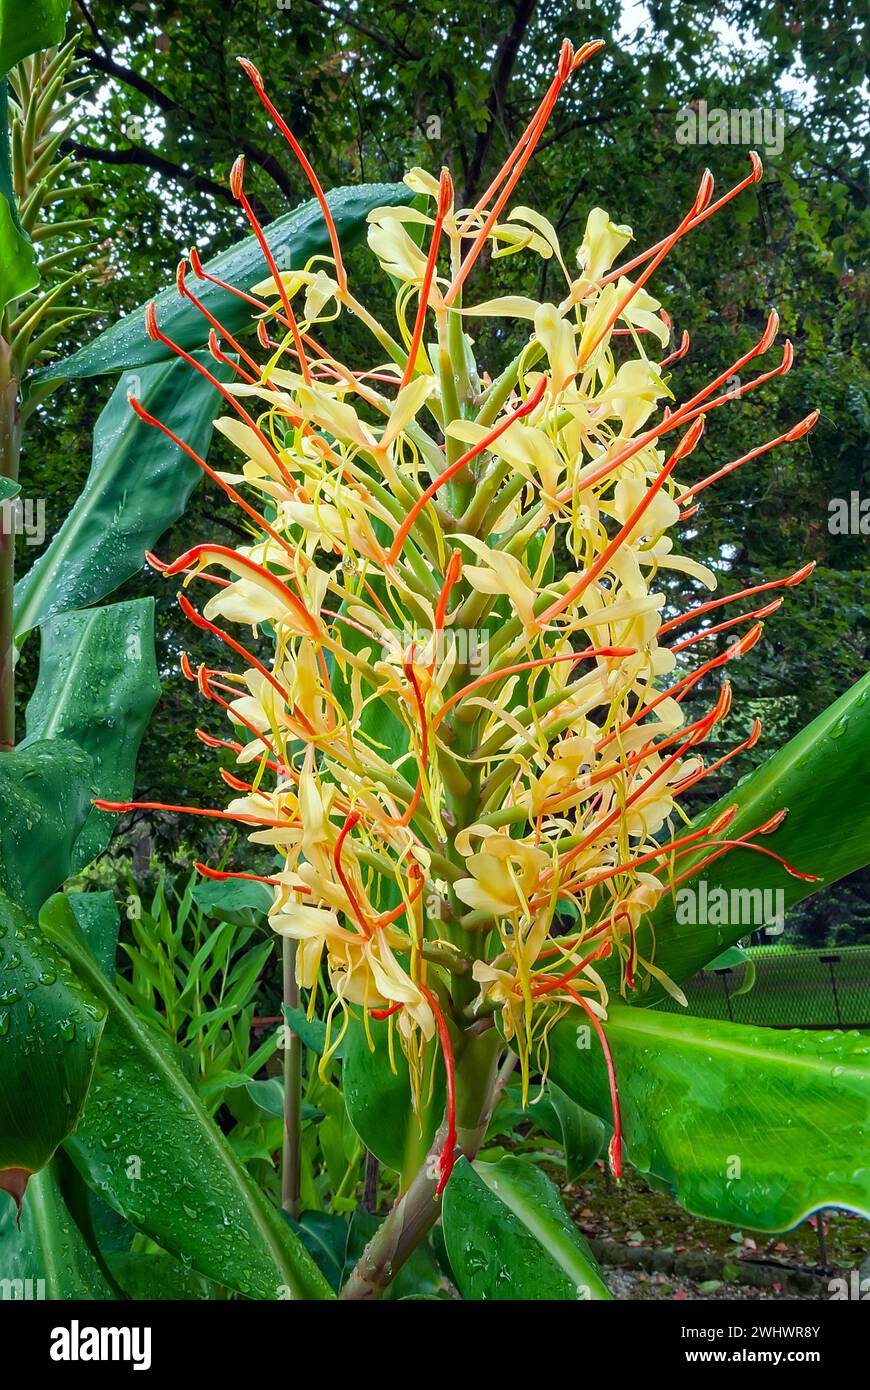 Kahili ginger (Hedychium gardnerianum), Zingiberaceae. Rhizomatous perennial herb. Ornamental plant. Yellow flower. Stock Photo